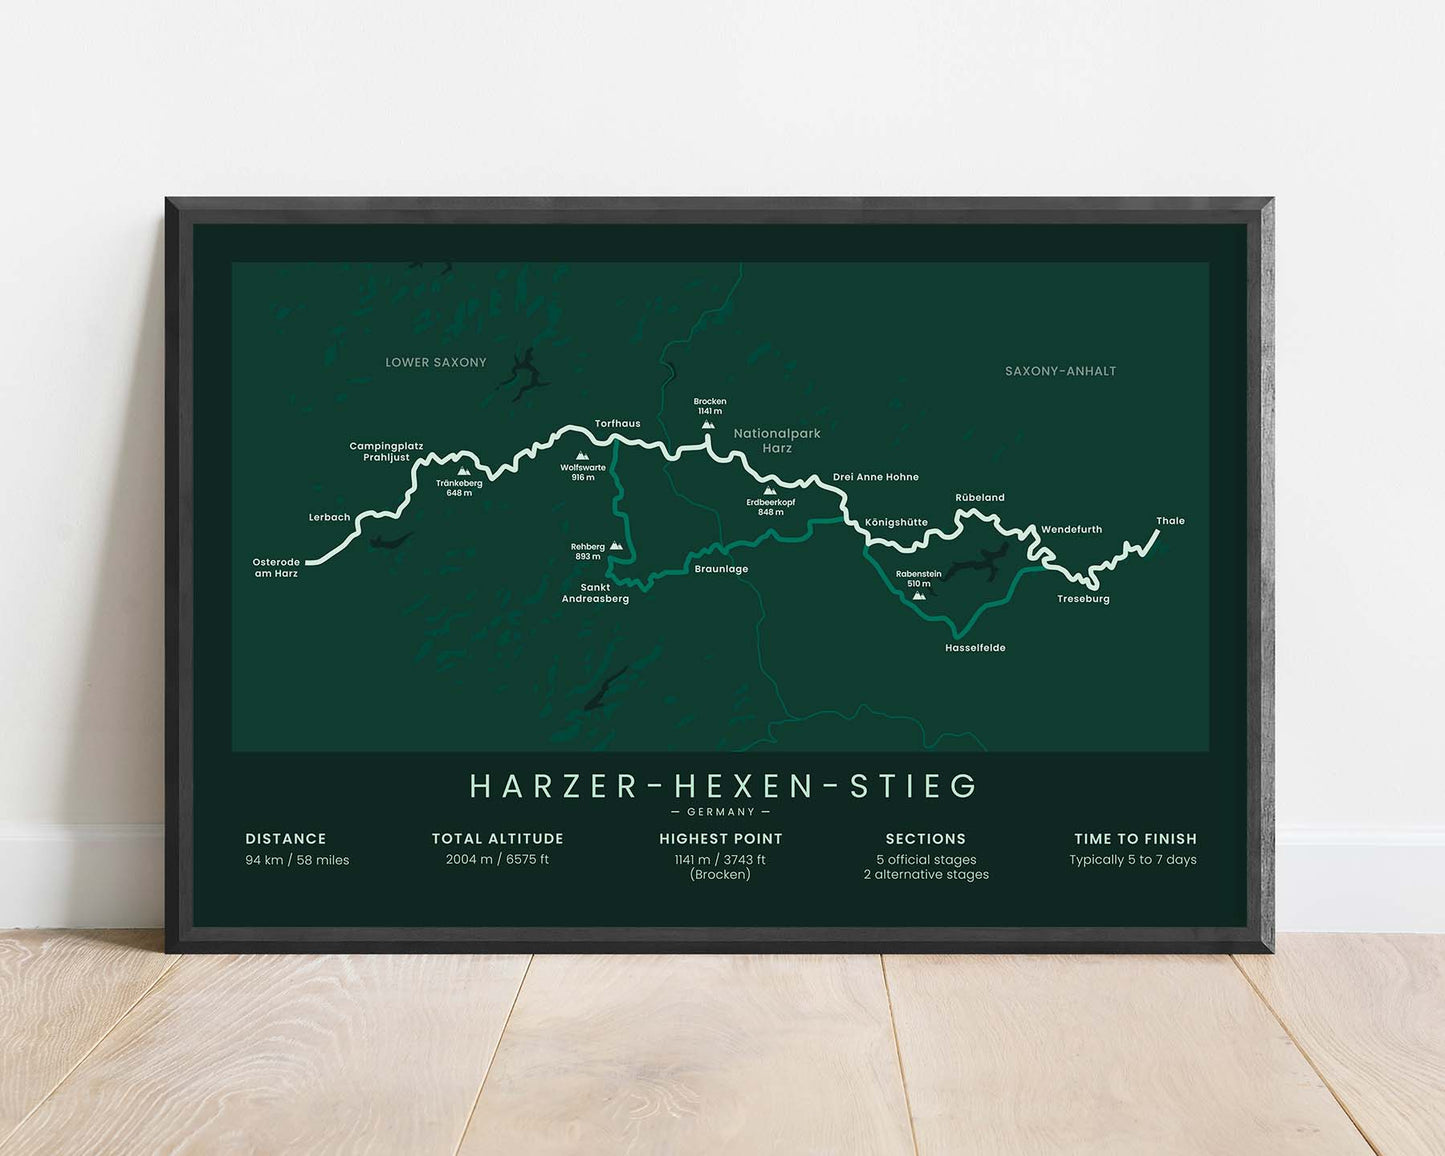 Harzer-Hexen-Stieg (Lower Saxony) Track Map Art with Green Background in Minimal Room Decor